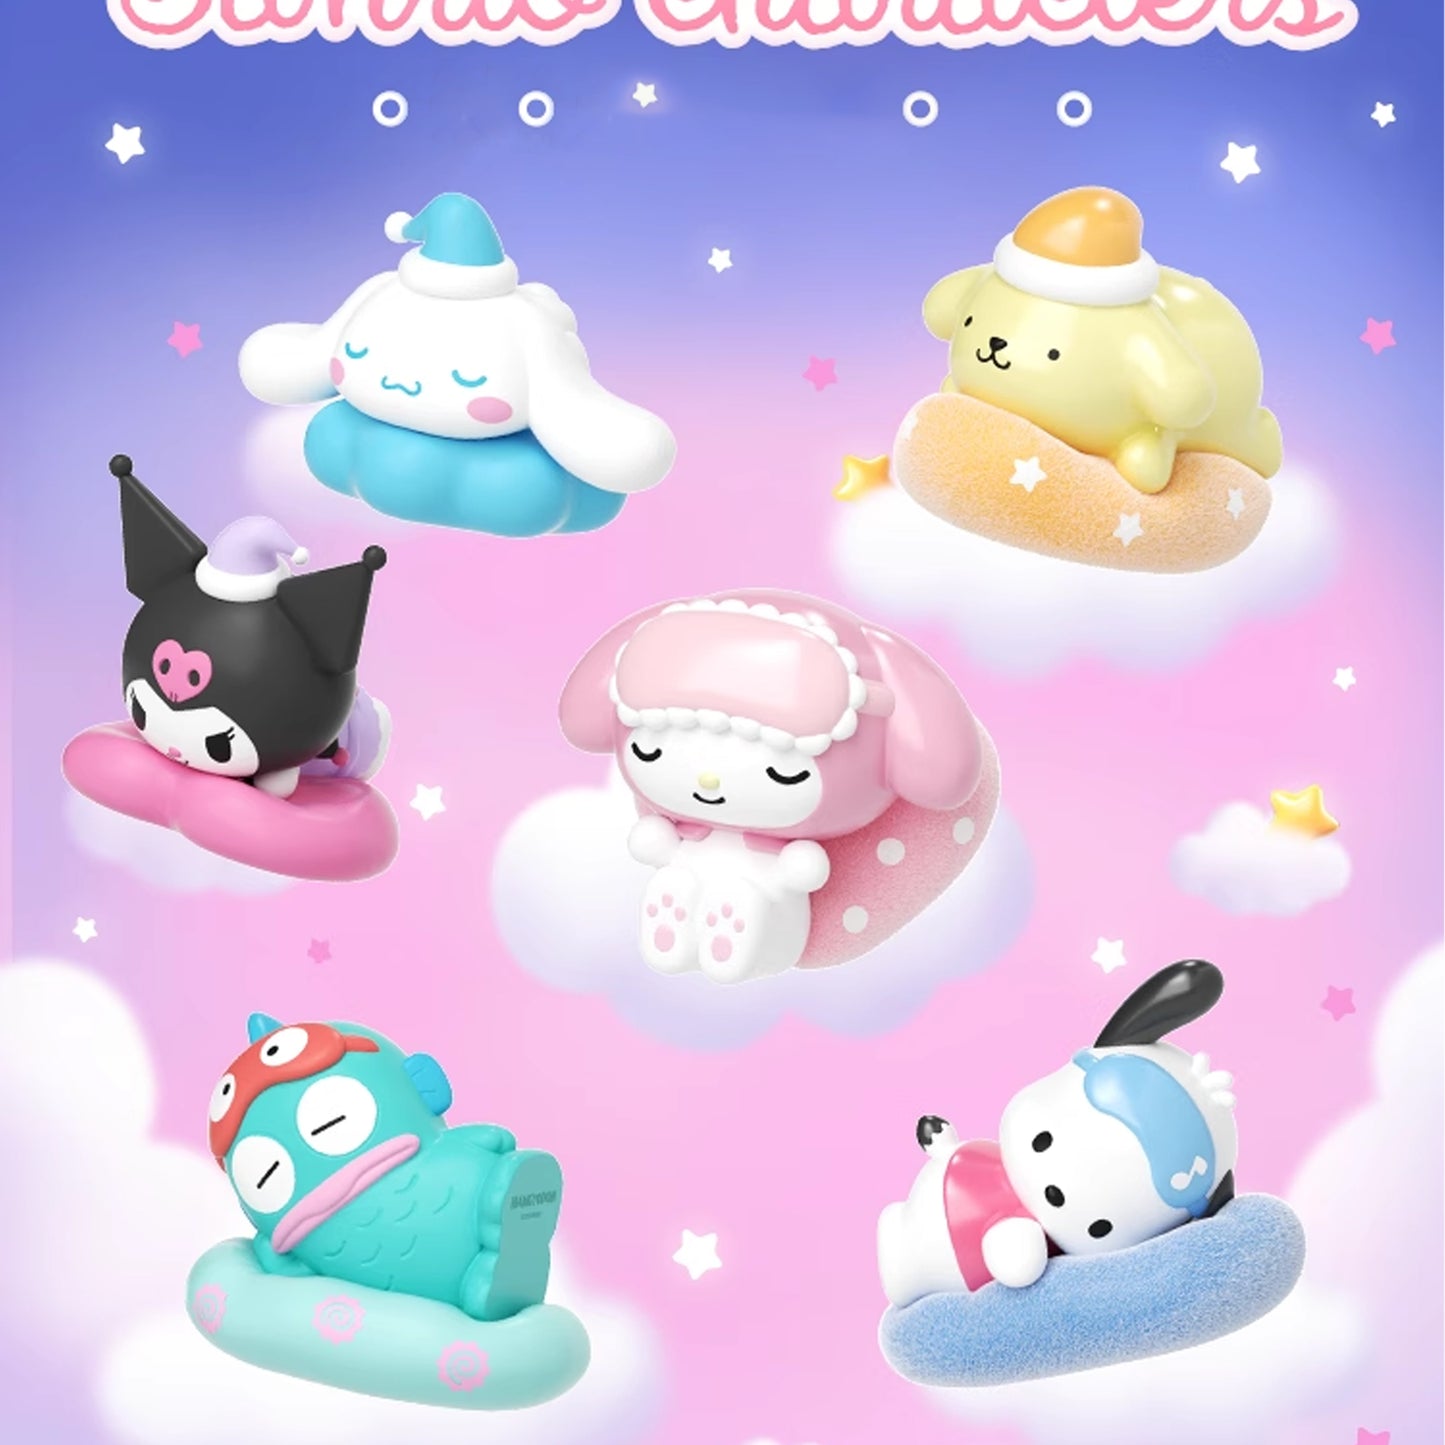 Sanrio Family Sweet Dream Series Mini Action Figures Blind Bag